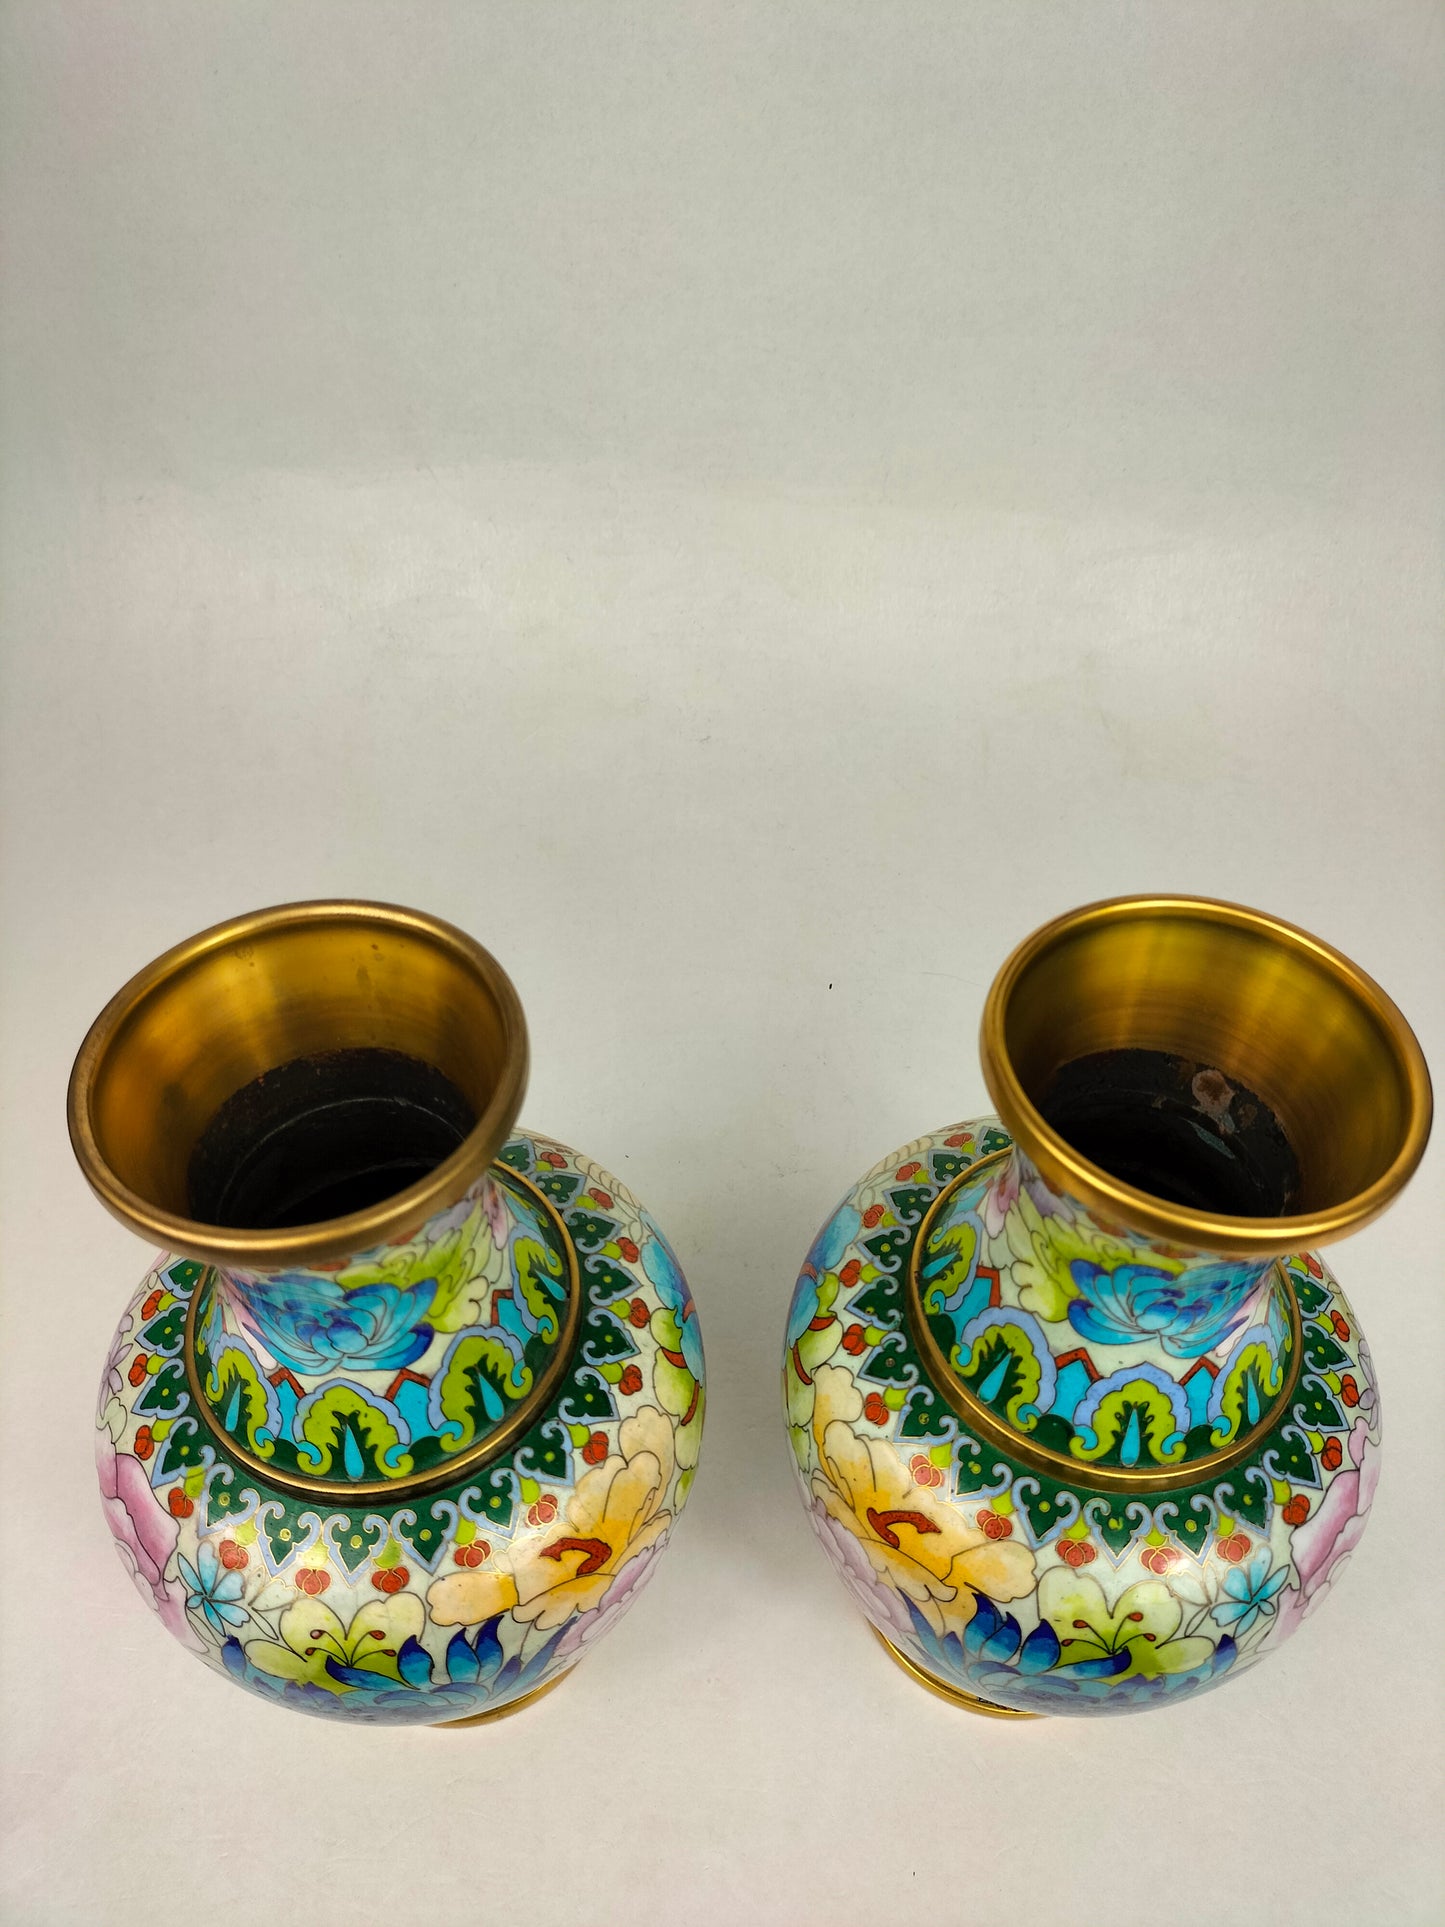 Pair of Chinese cloisonne enamel millefleur vases // 20th century